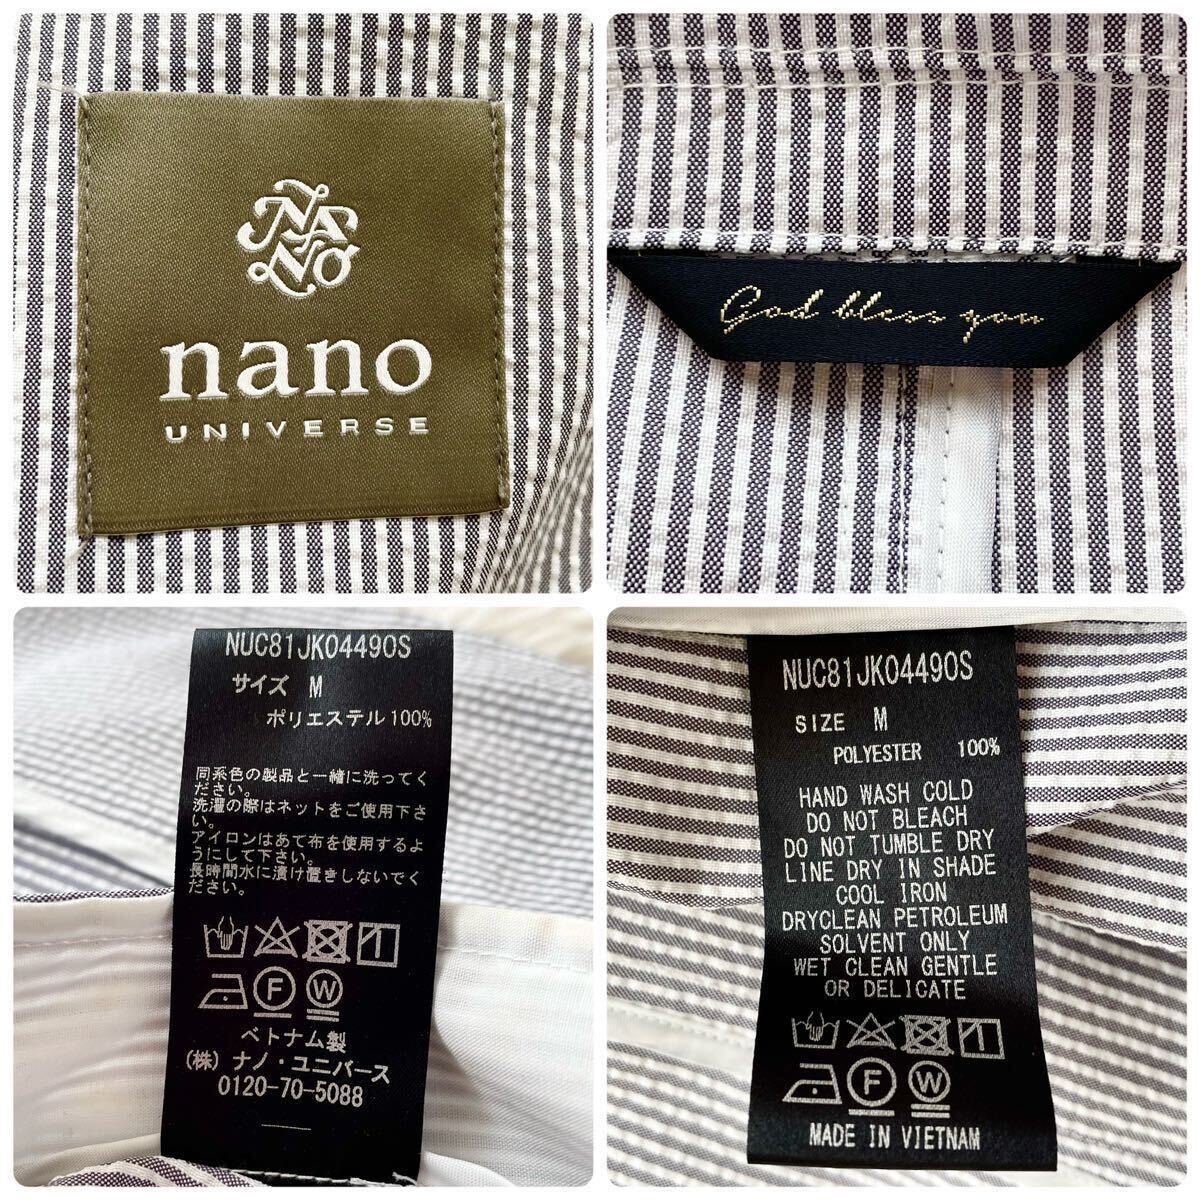  прекрасный товар nano universe Nano Universe sia футбол Anne темно синий tailored jacket блейзер серый полоса эластичный мужской весна лето . дом стирка 